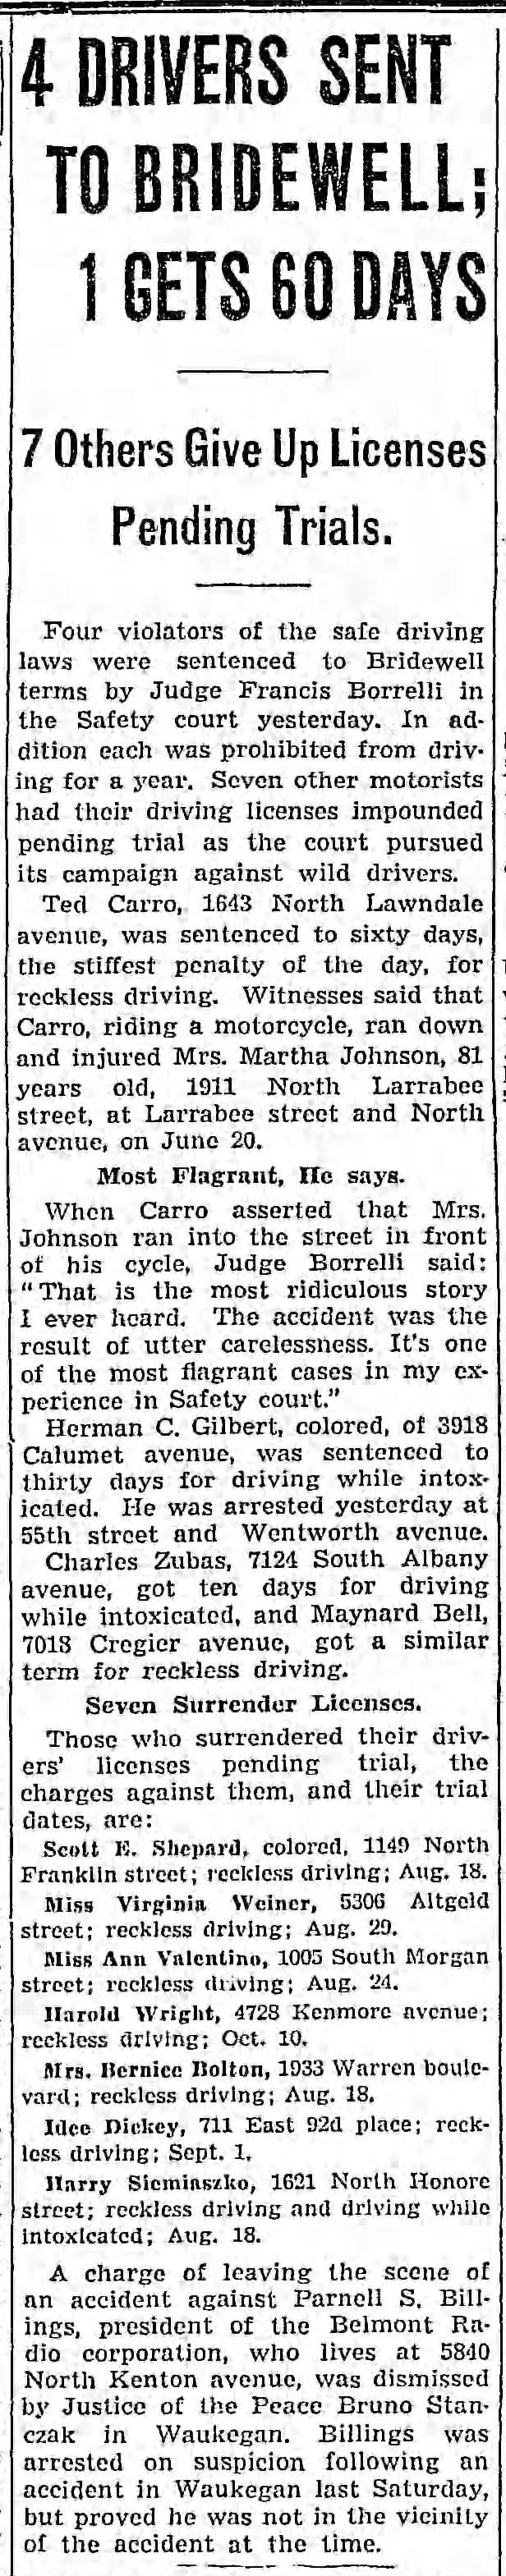 Ted Carro sent to Jail
Chicago Tribune 12 Aug 1939